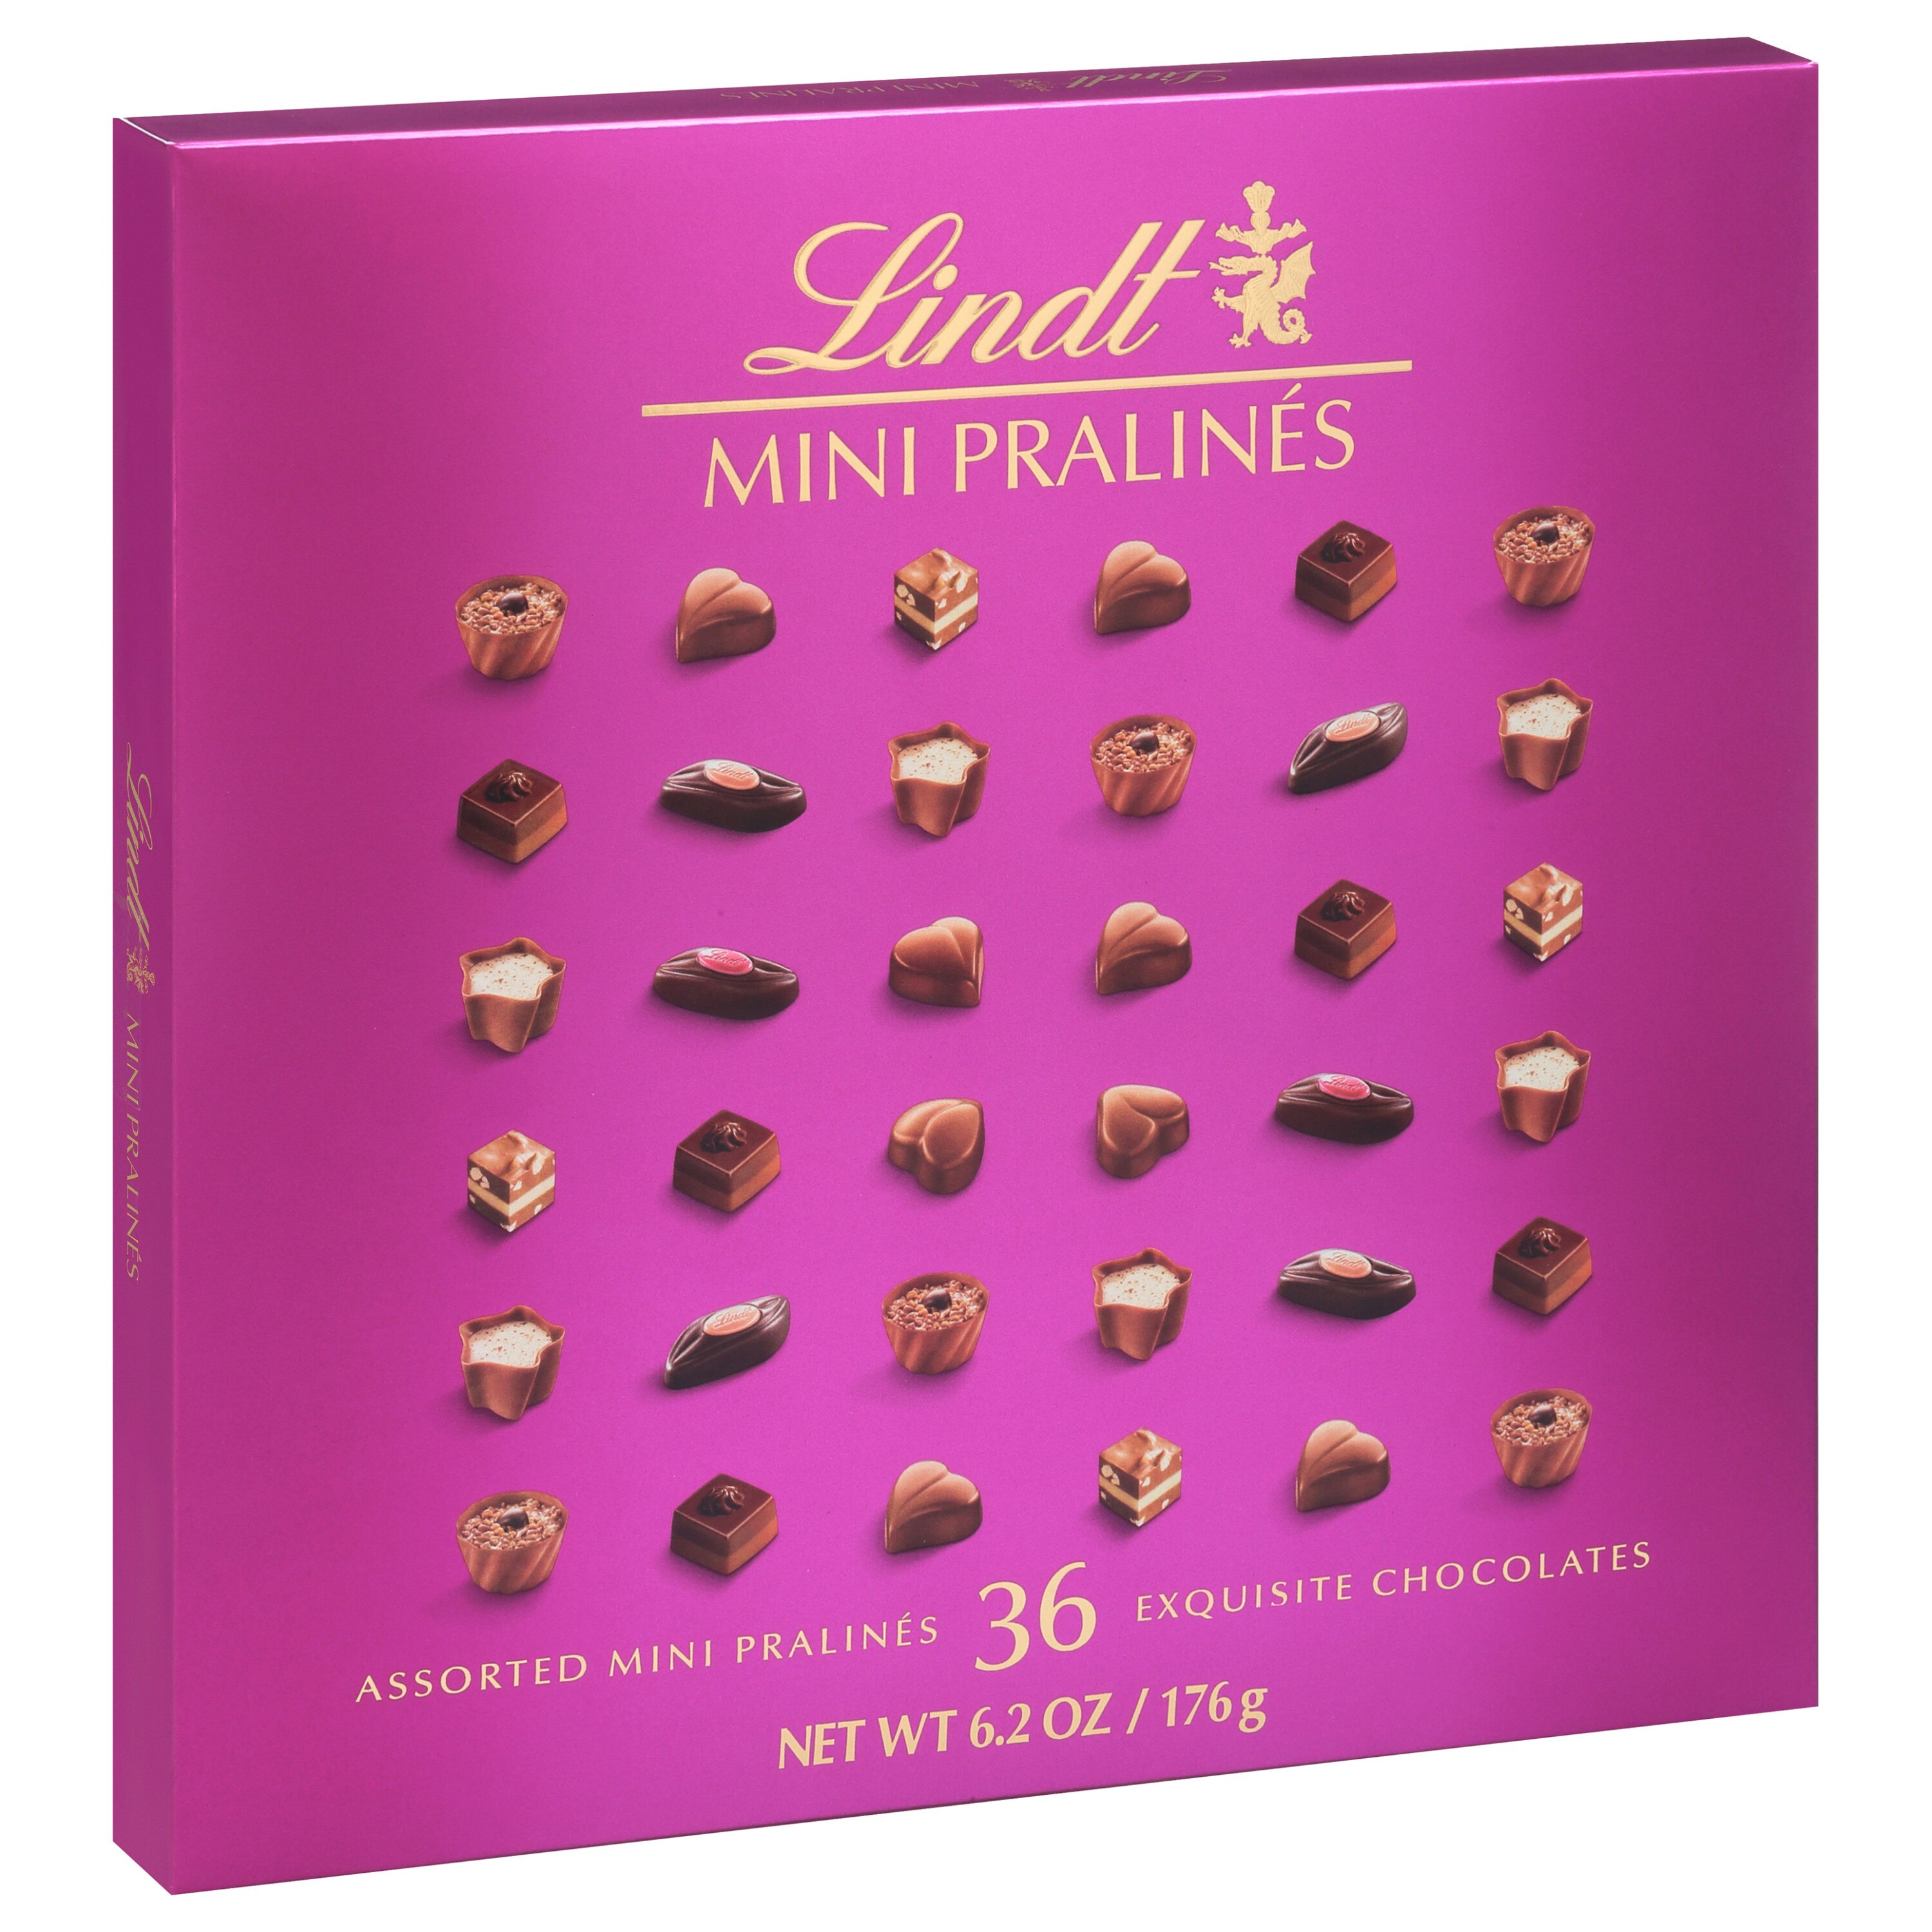 Lindt Mini Pralines, Assorted Chocolate Pralines with Premium Filling, 6.2 OZ Box